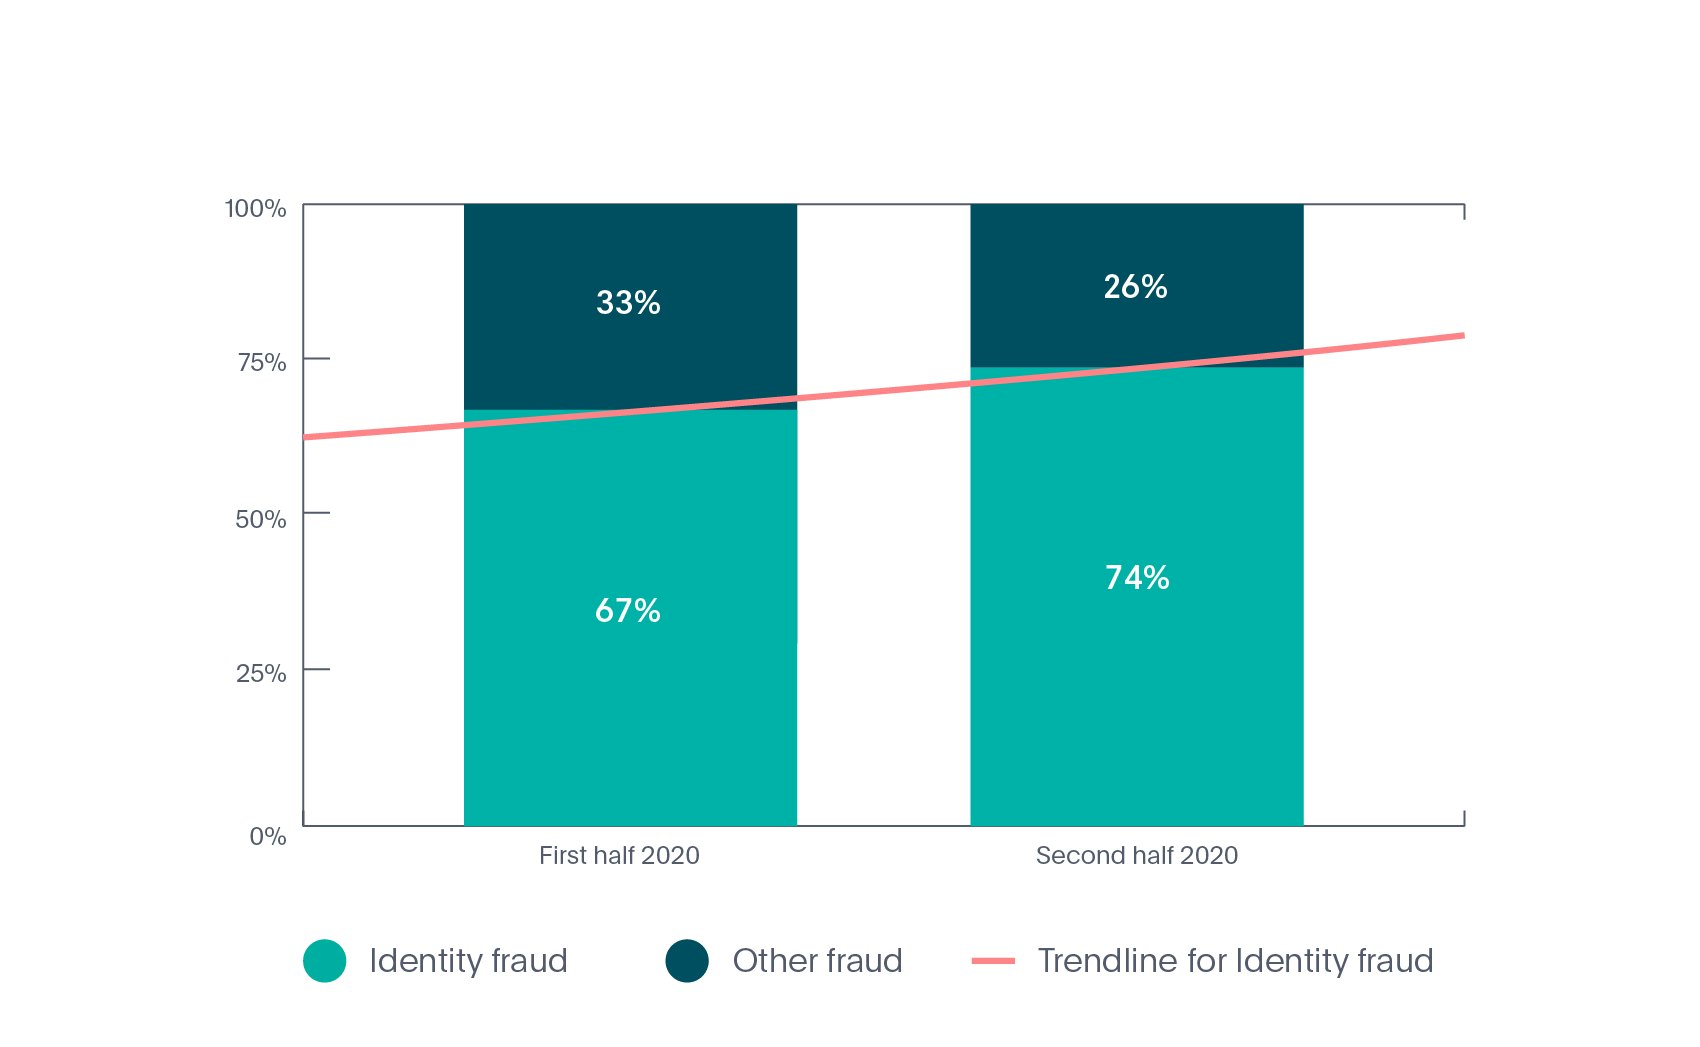 Online identity fraud rate in Fintech industry in 2020